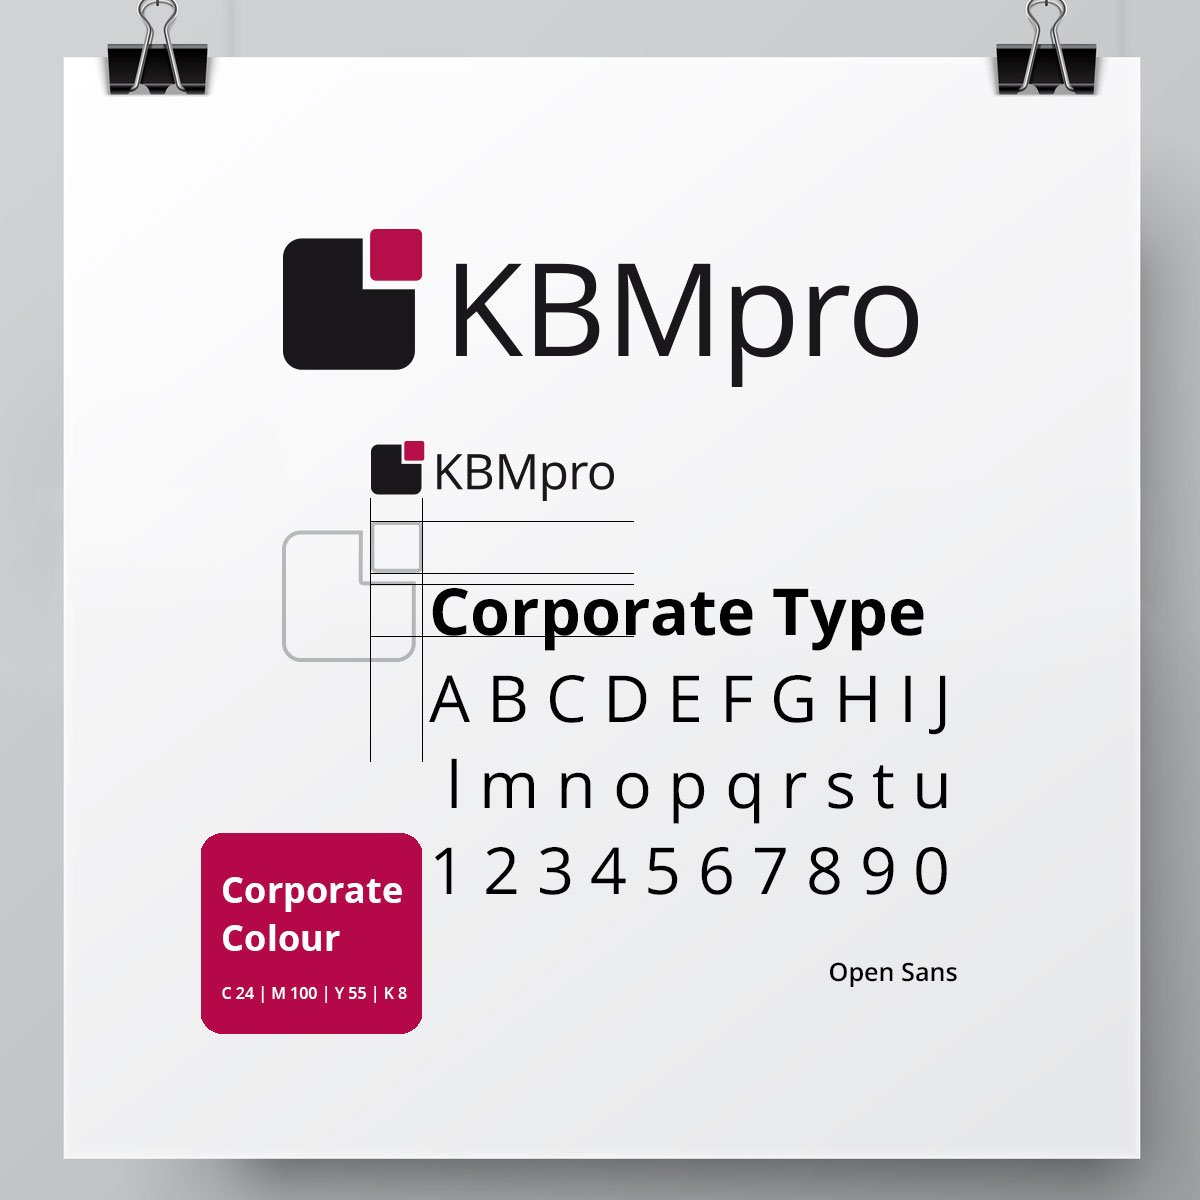 KBMpro-Corporate Design